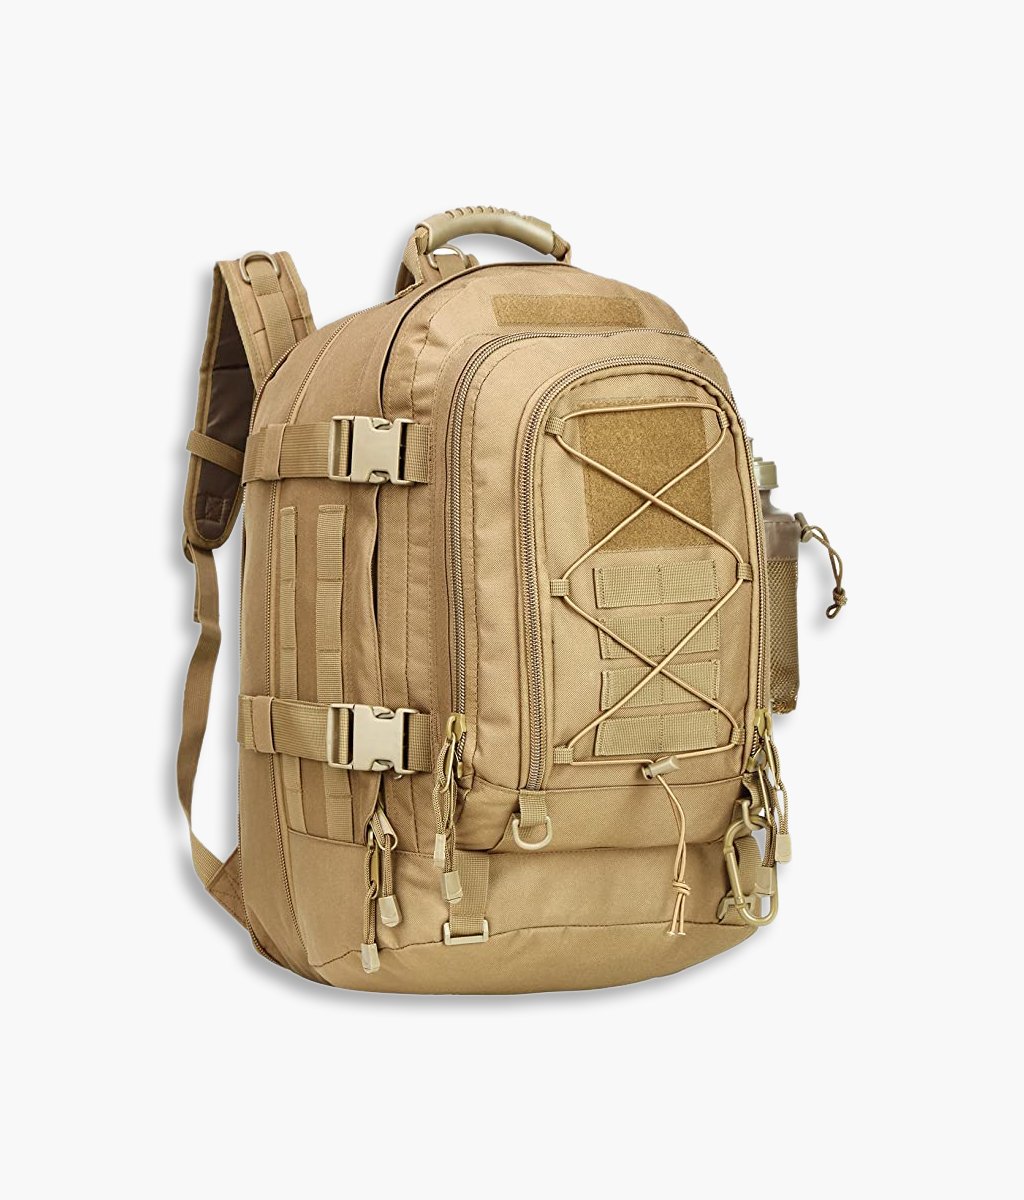 Military Tactical Backpack Waterproof